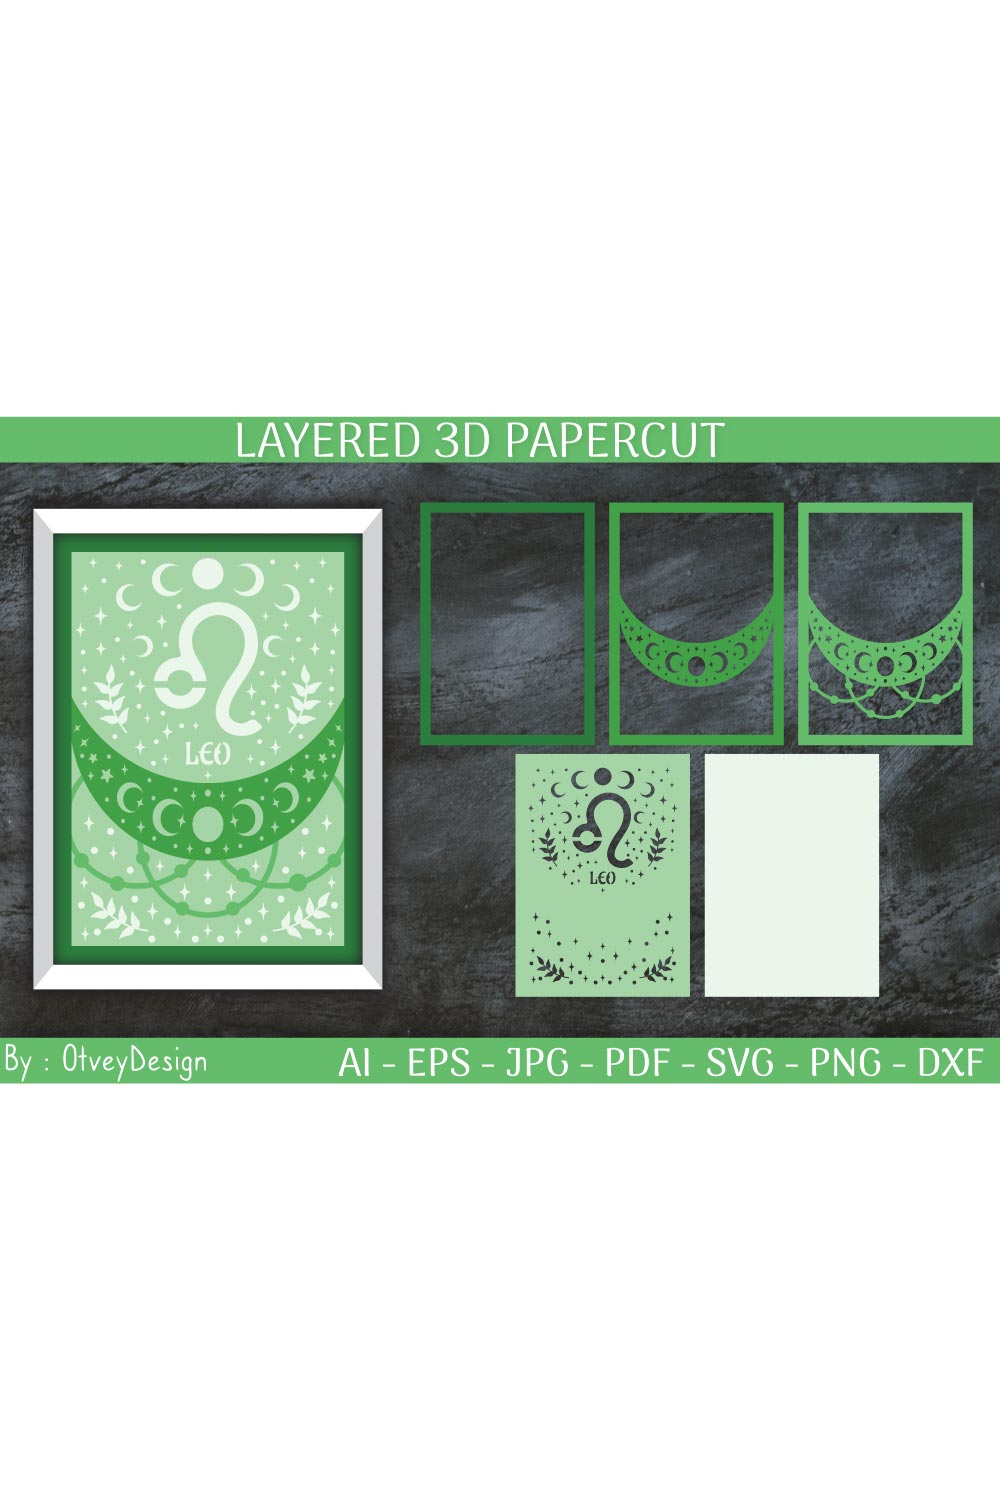 Leo Zodiac Signs Celestial 3D Layered Papercut pinterest preview image.